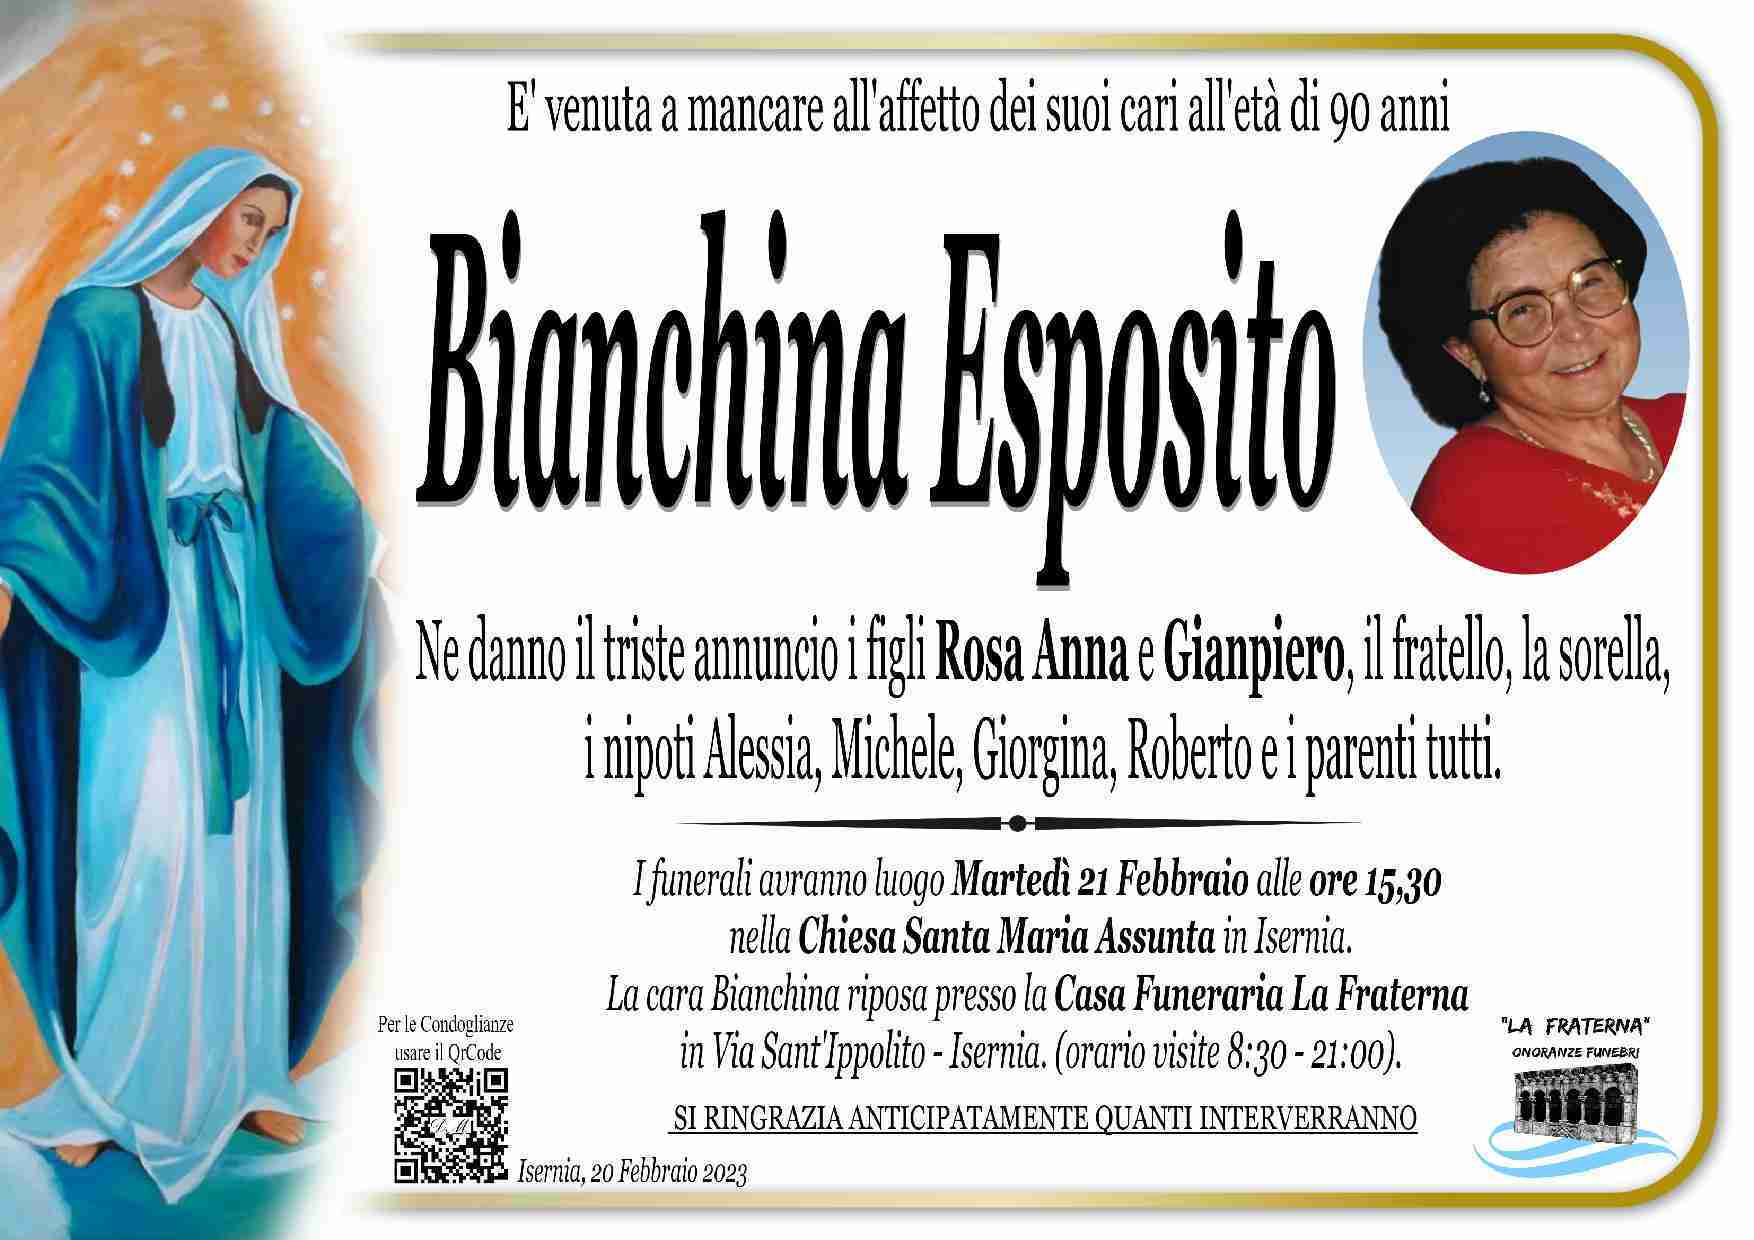 Bianchina Esposito